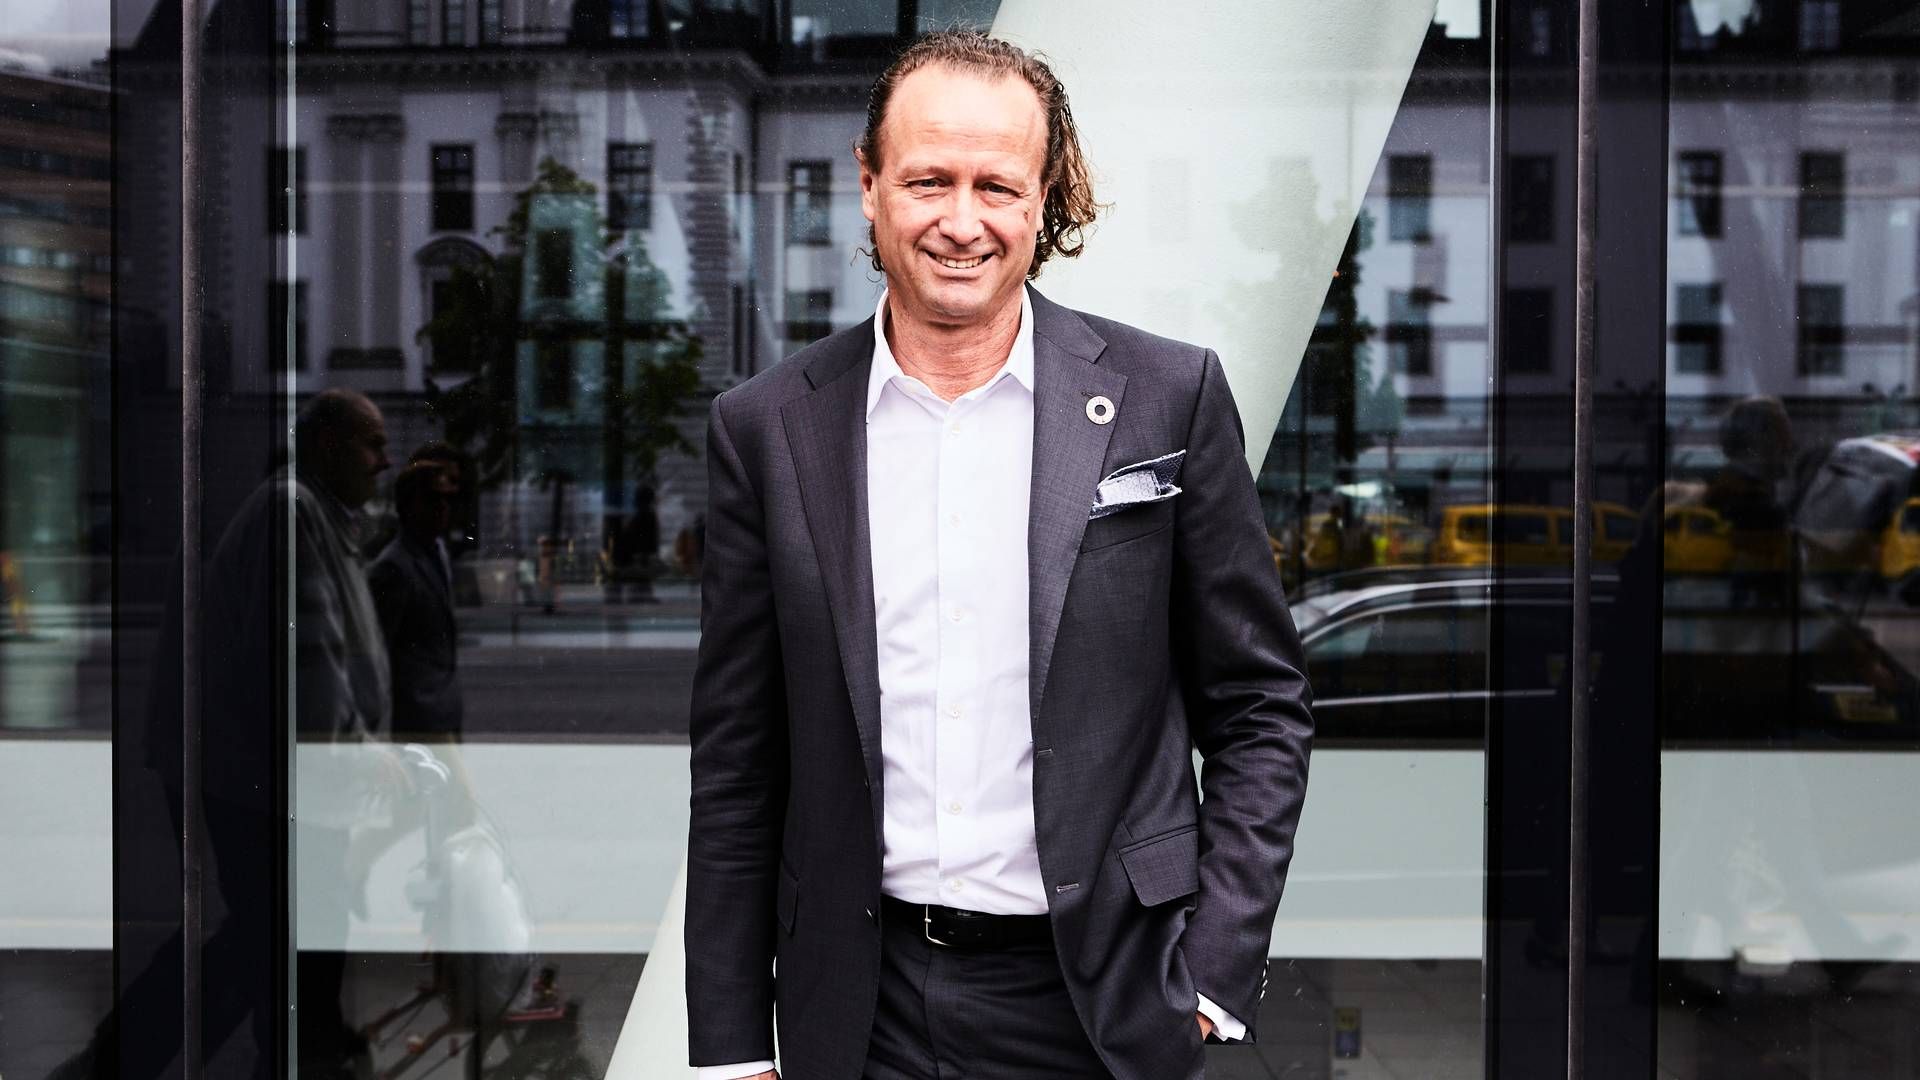 Adm. dir. Jan Erik Saugestad i Storebrand Asset Management vil ha en nordisk investorallianse som sikrer grønn omstilling basert på nordiske verdier. | Foto: Pr/ Storebrand